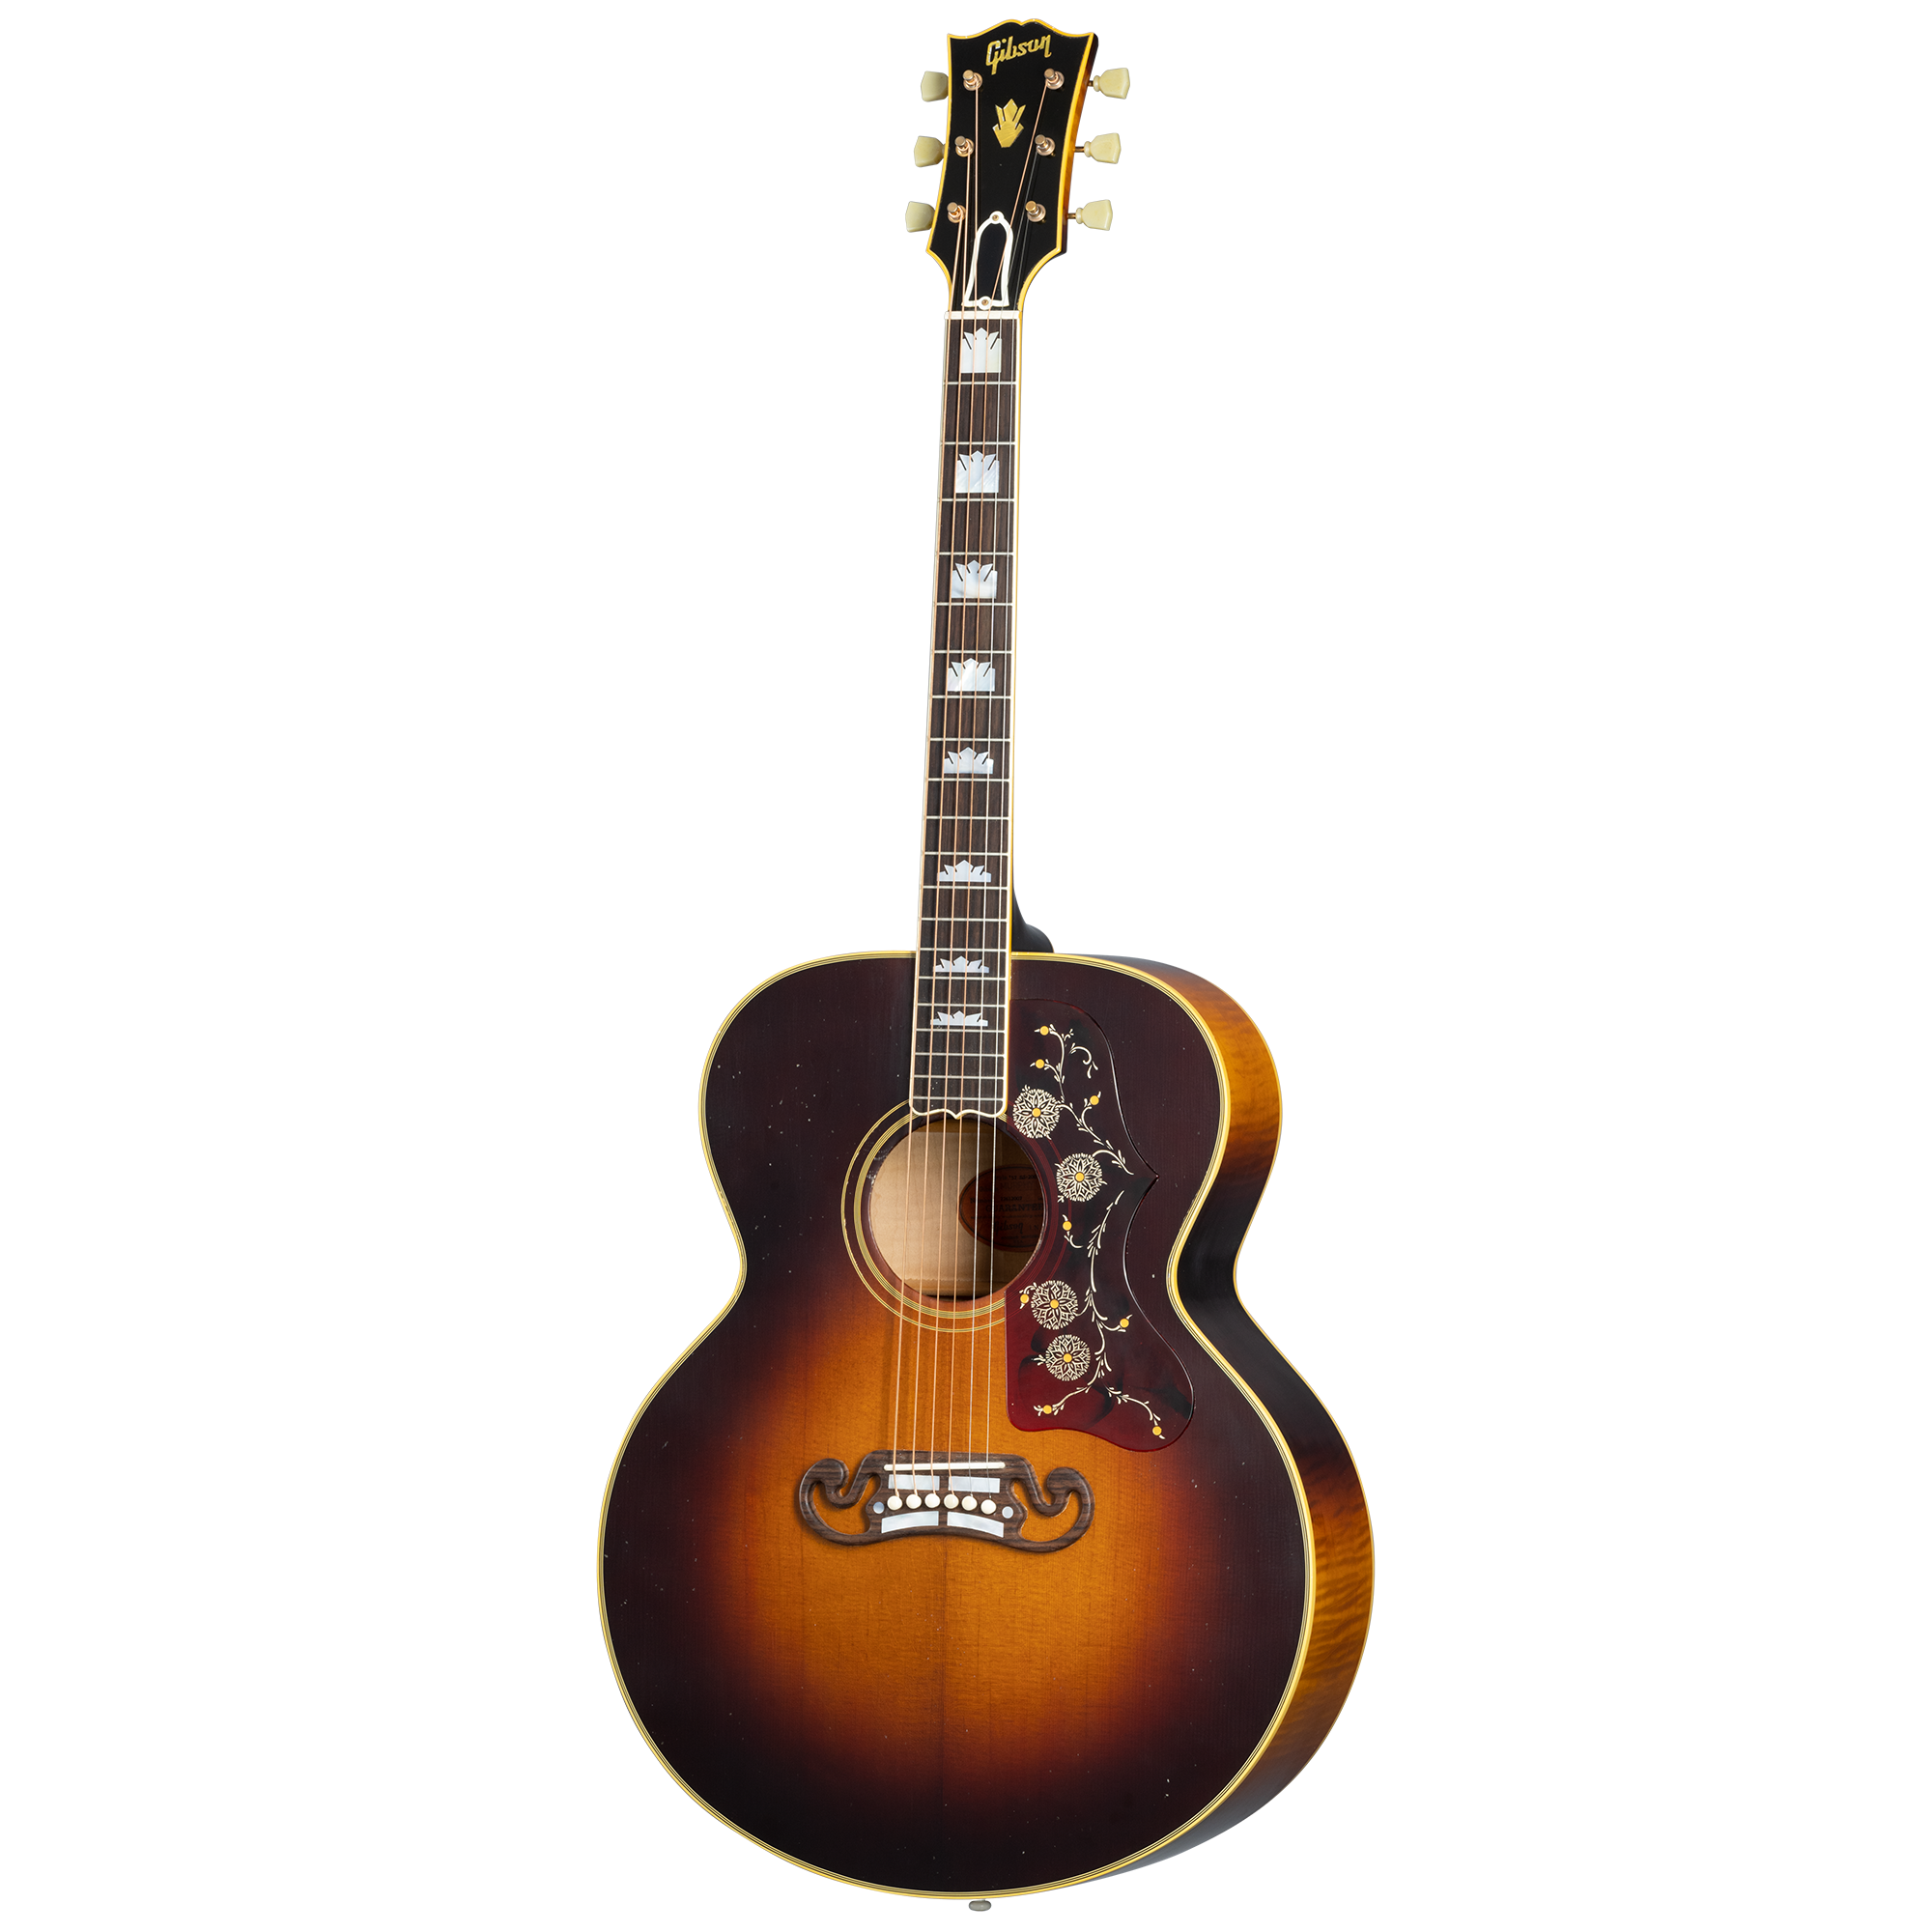 Gibson 1957 Sj-200 Murphy Lab Light Aged Acoustic Guitar - Vintage Sunburst (Sj200)